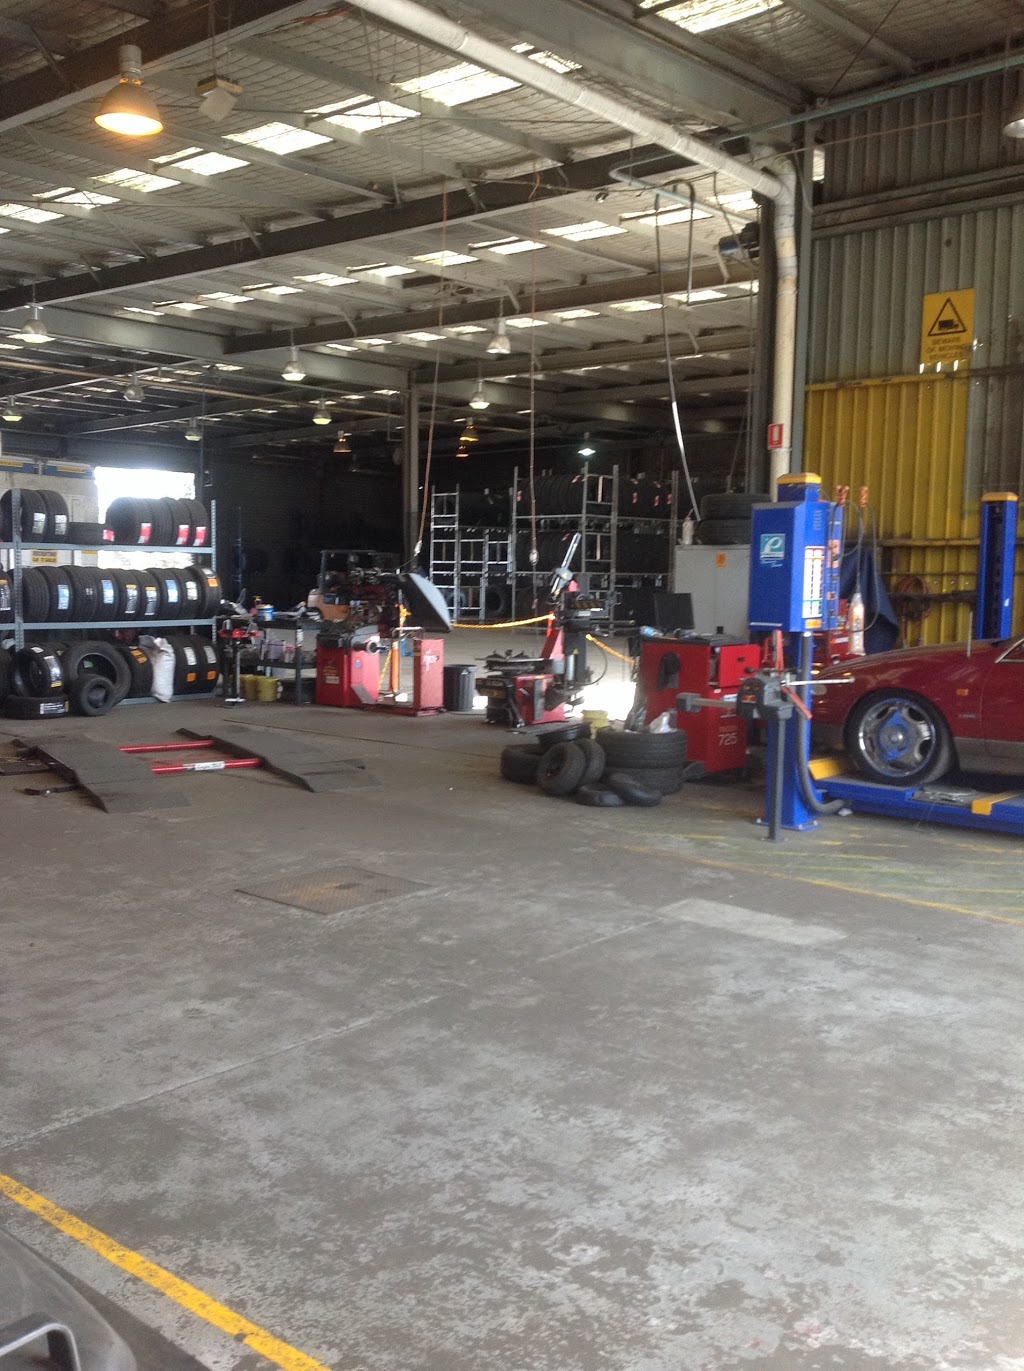 Tyreright West Melbourne | car repair | 702/714 Footscray Rd, West Melbourne VIC 3003, Australia | 0396878000 OR +61 3 9687 8000